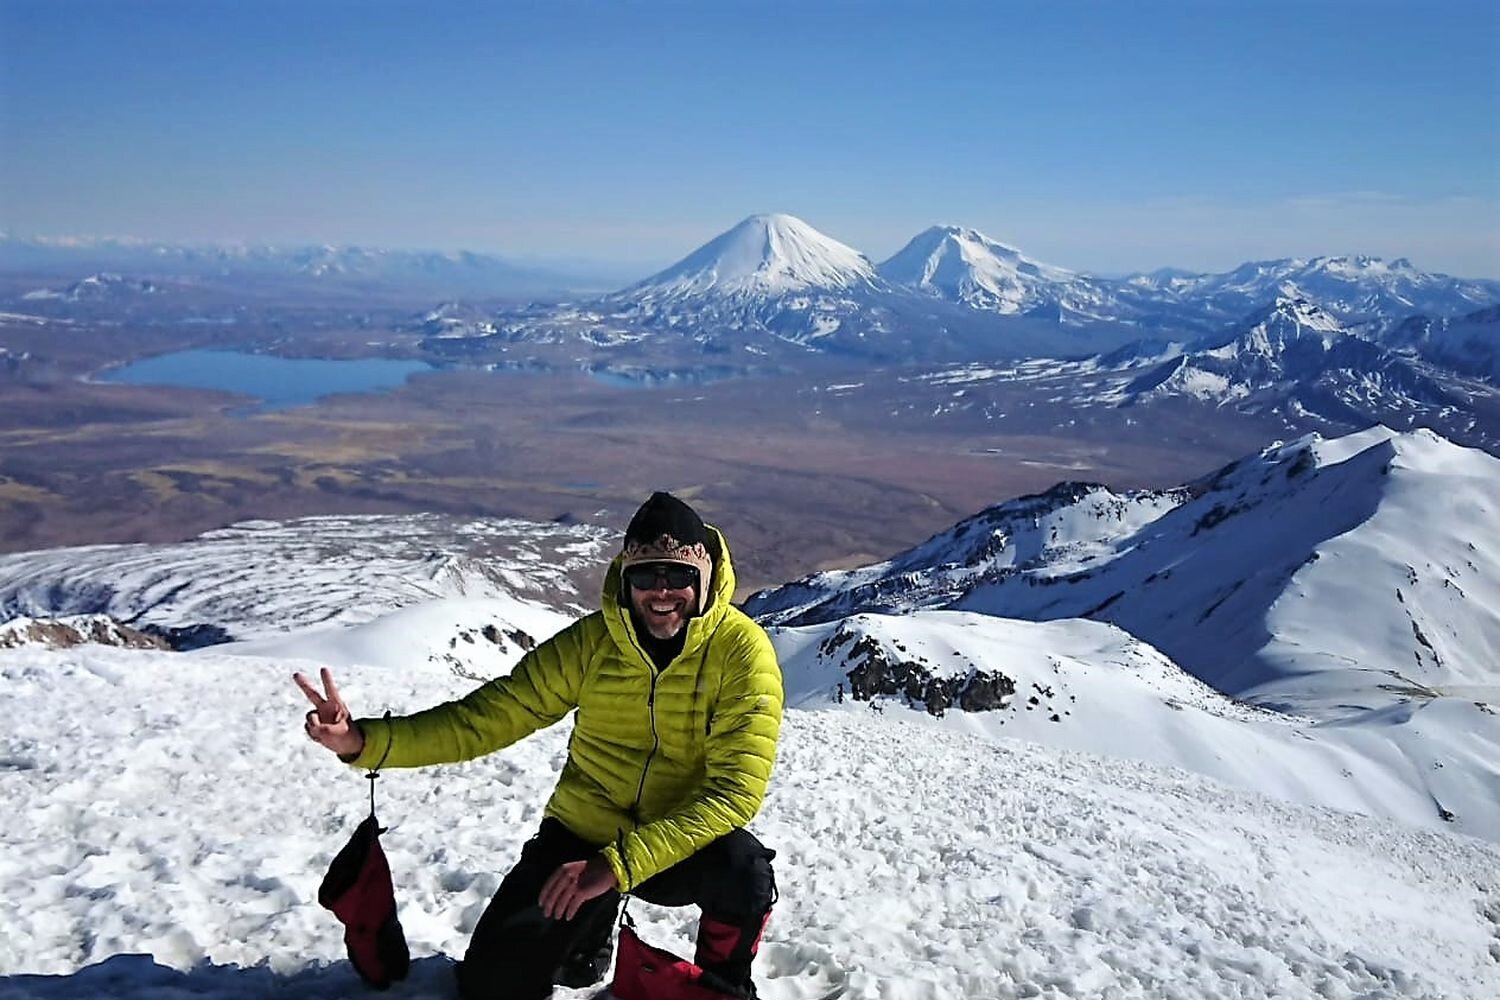  Acotango climb, with the Parinacota and Pomerape volcanos in the background  